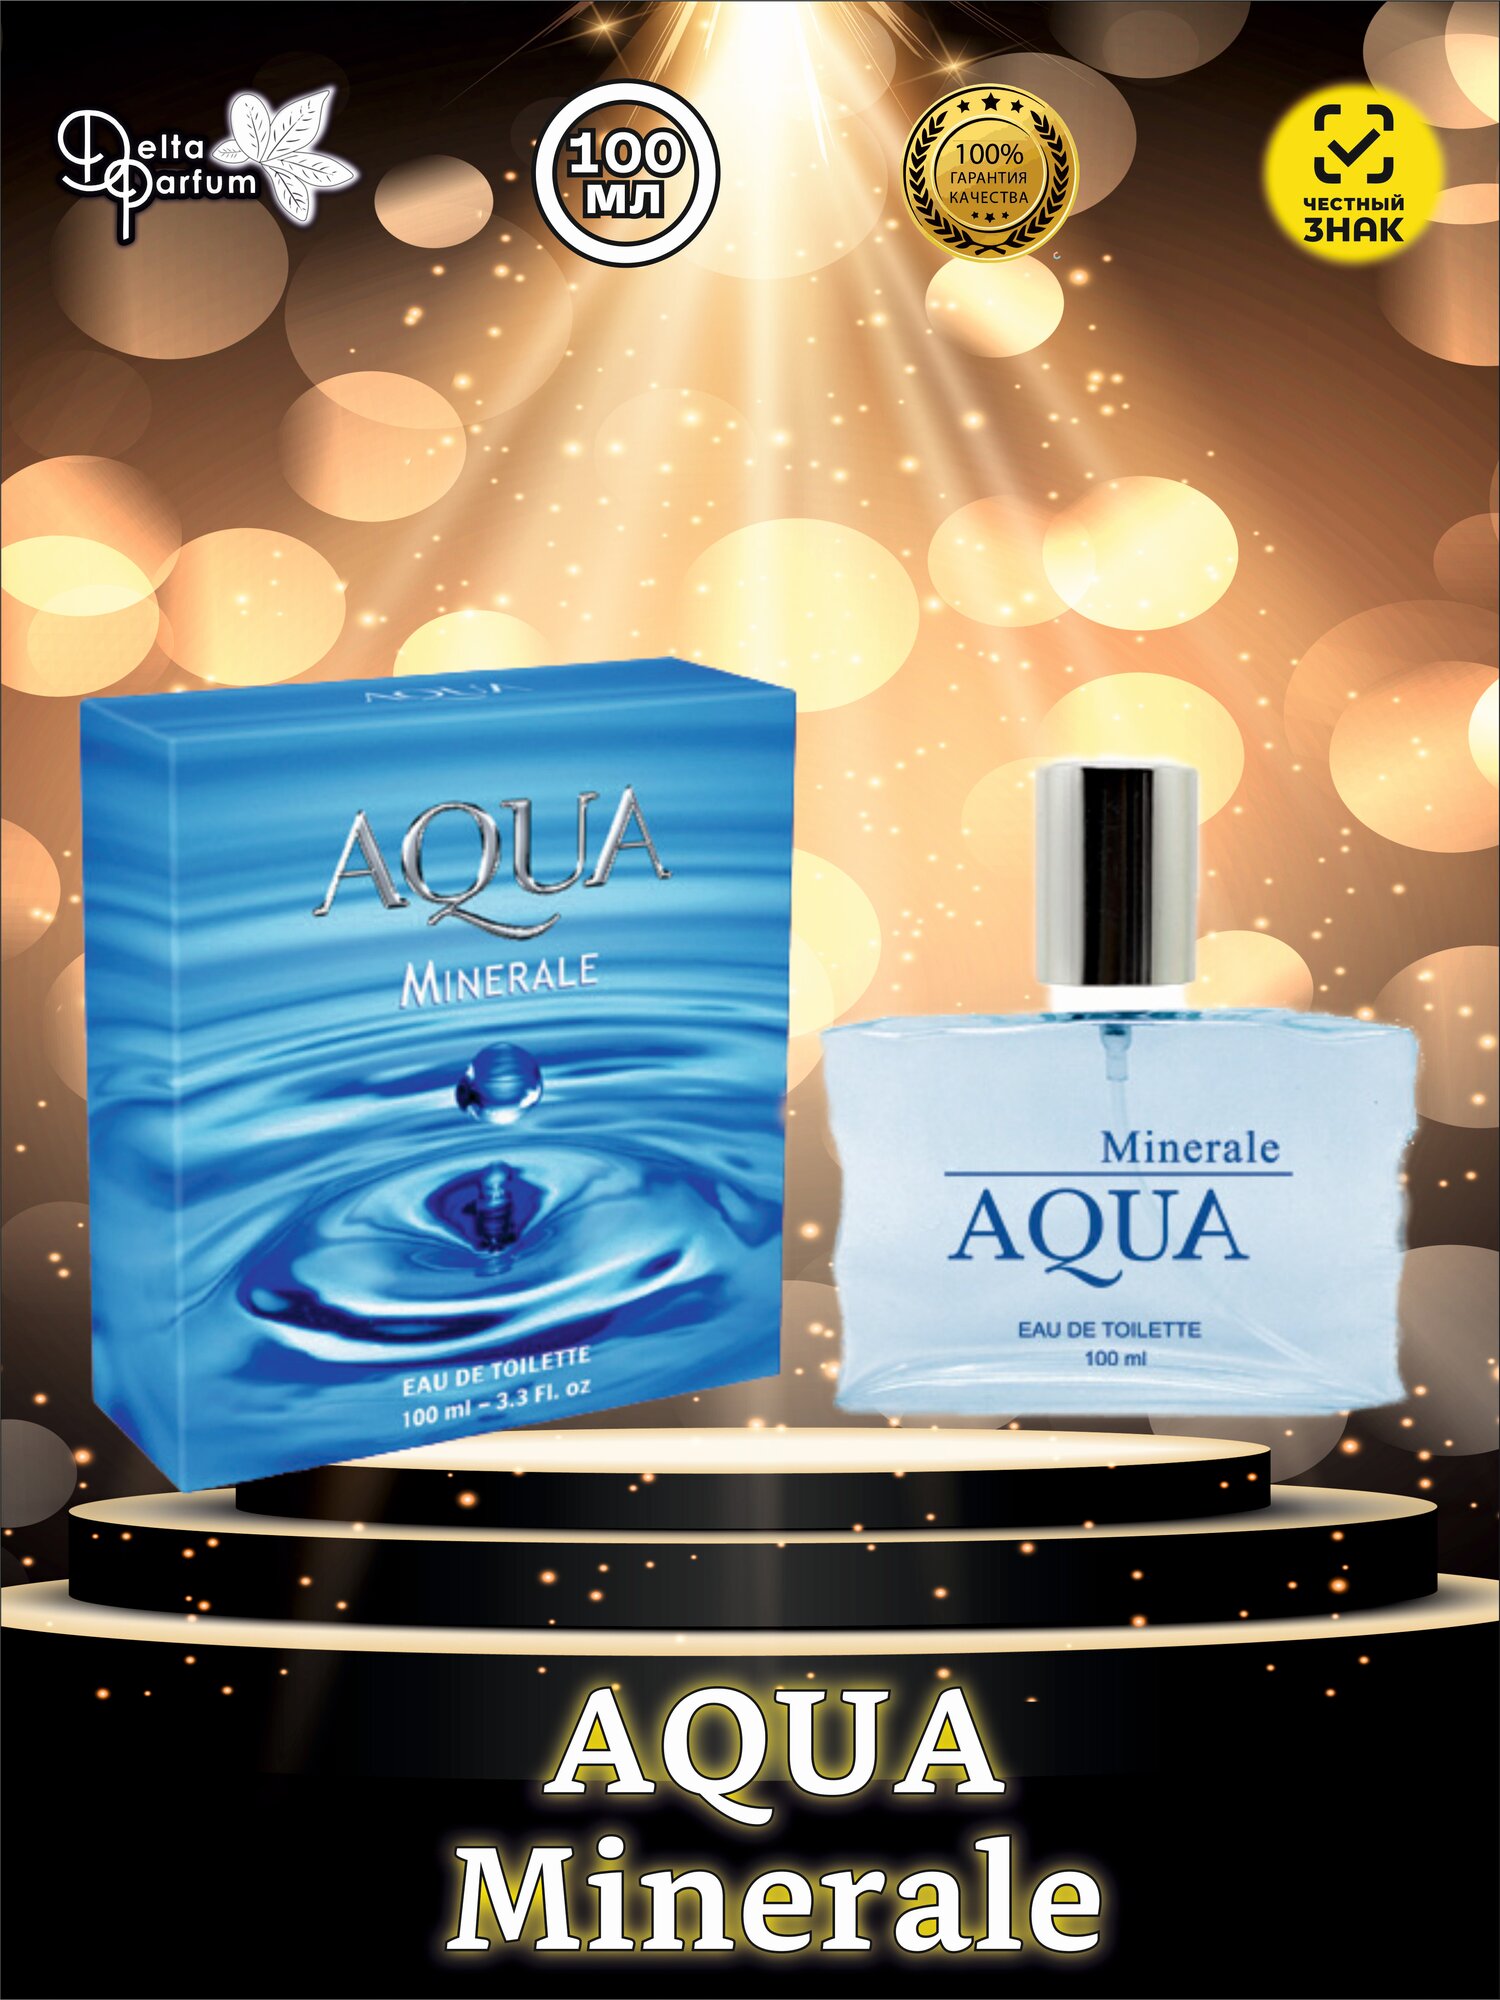 Delta parfum Туалетная вода мужская Aqua Minerale